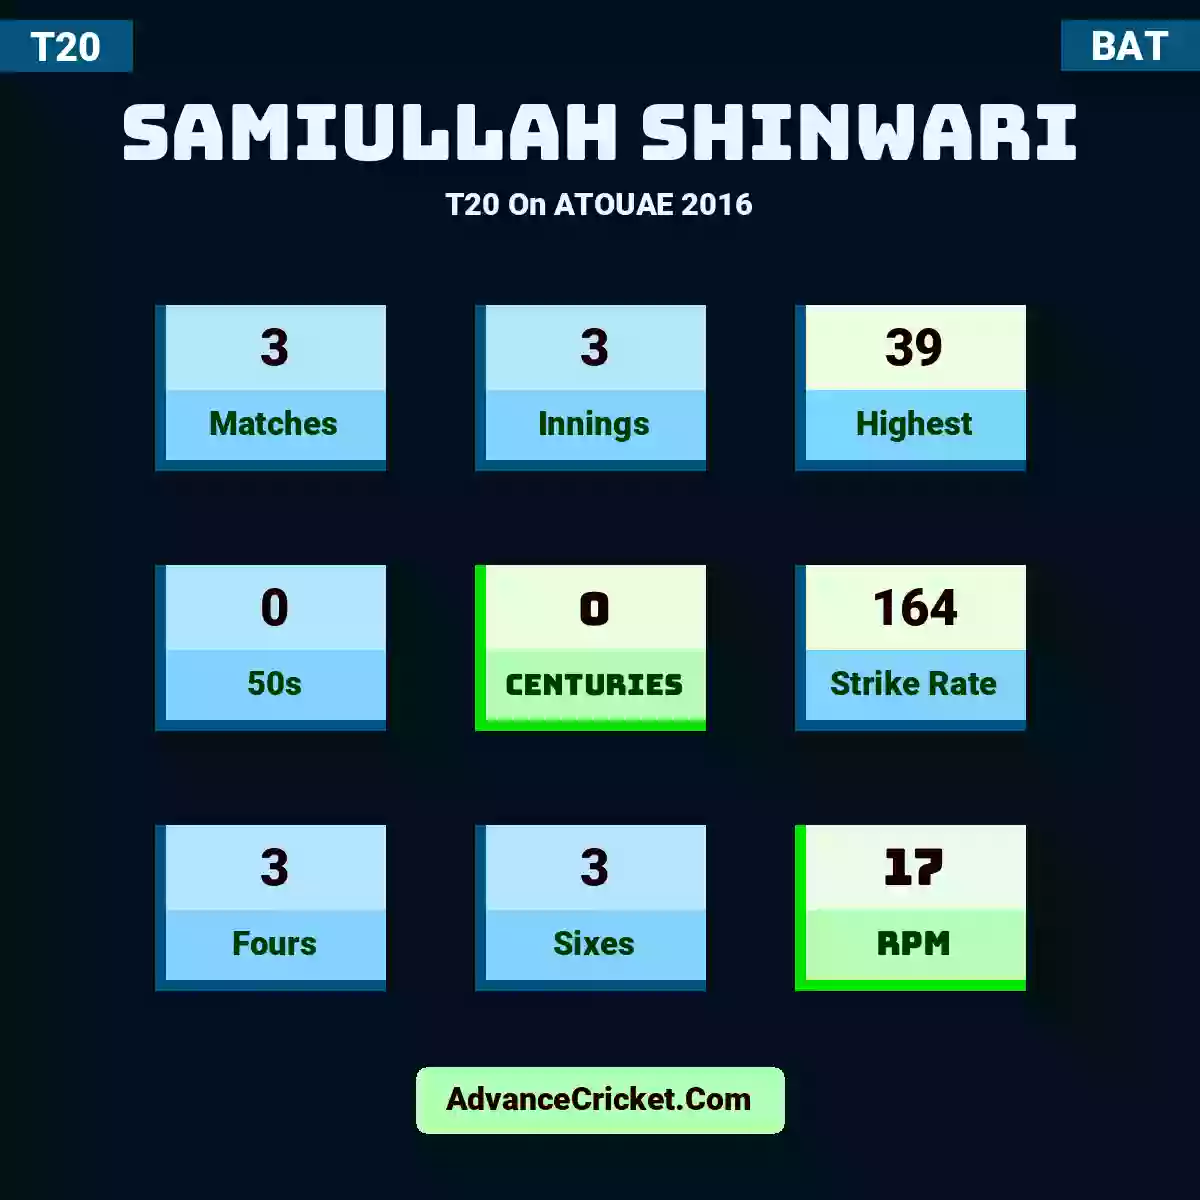 Samiullah Shinwari T20  On ATOUAE 2016, Samiullah Shinwari played 3 matches, scored 39 runs as highest, 0 half-centuries, and 0 centuries, with a strike rate of 164. S.Shinwari hit 3 fours and 3 sixes, with an RPM of 17.